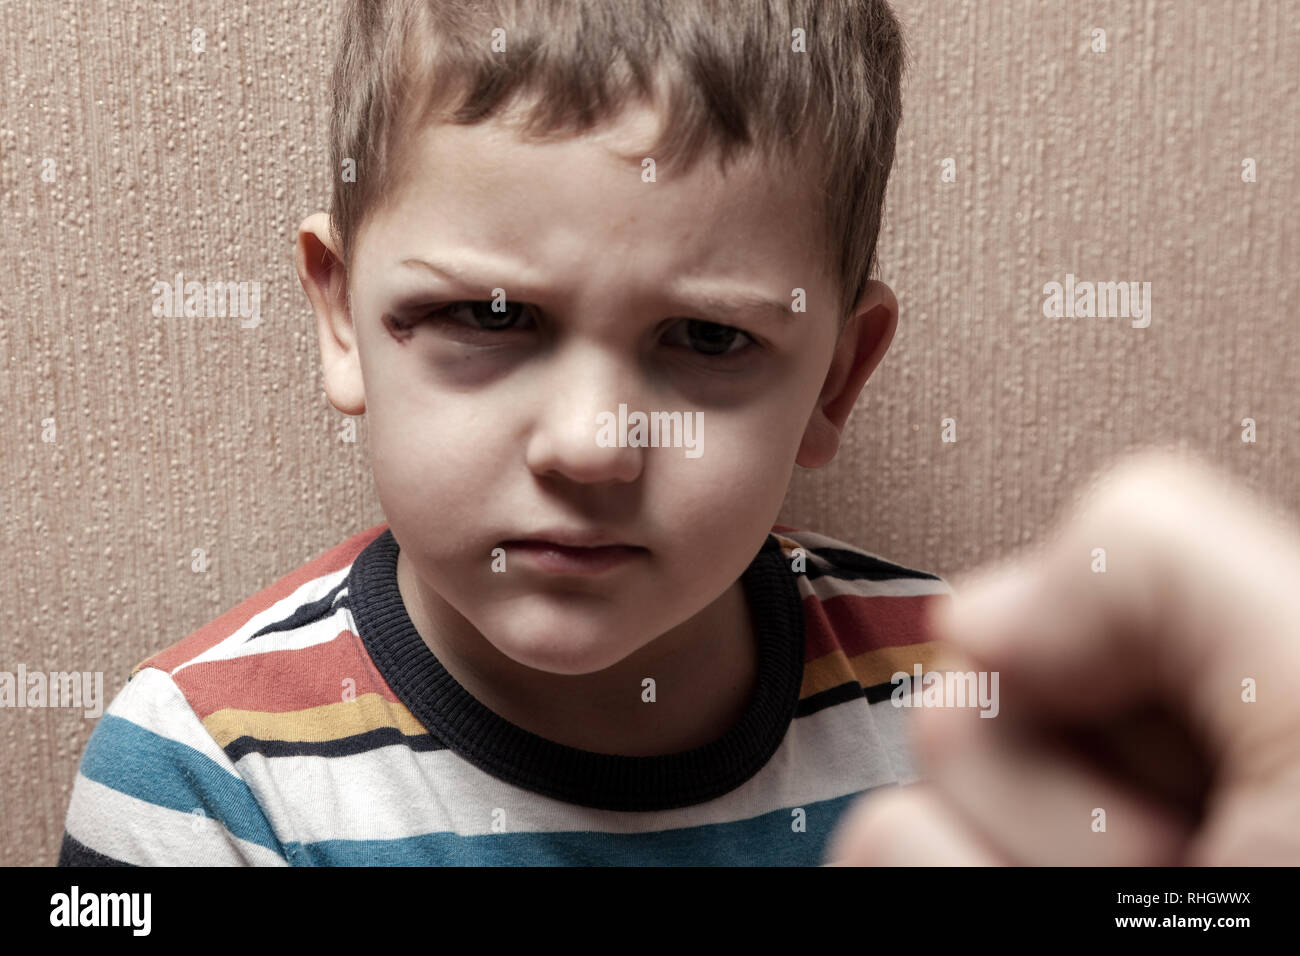 Boy Bruises Immagini e Fotos Stock - Alamy